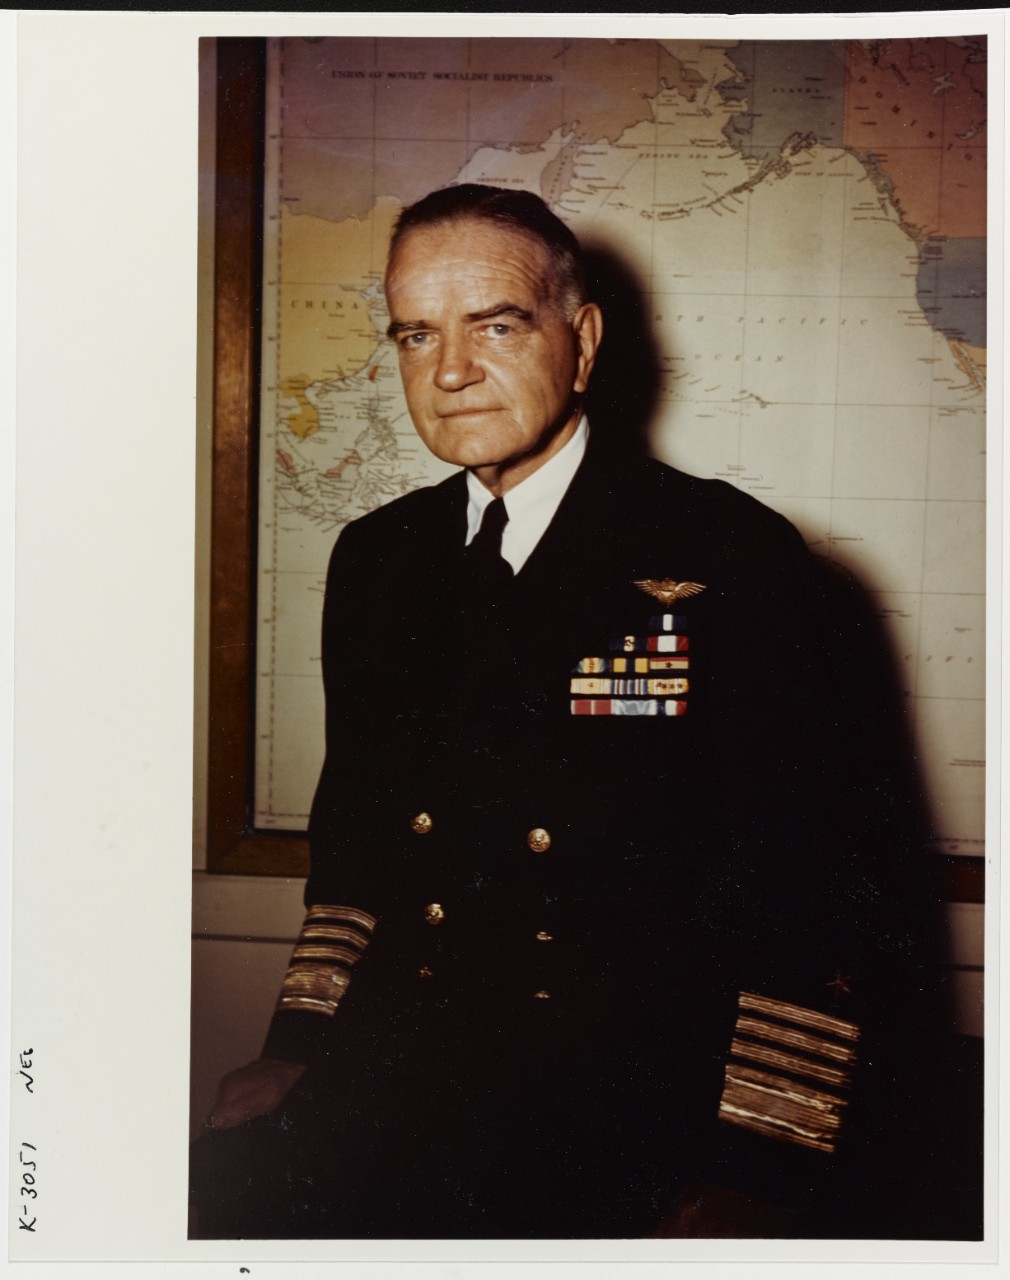 Admiral. William F. Halsey, U.S. Navy